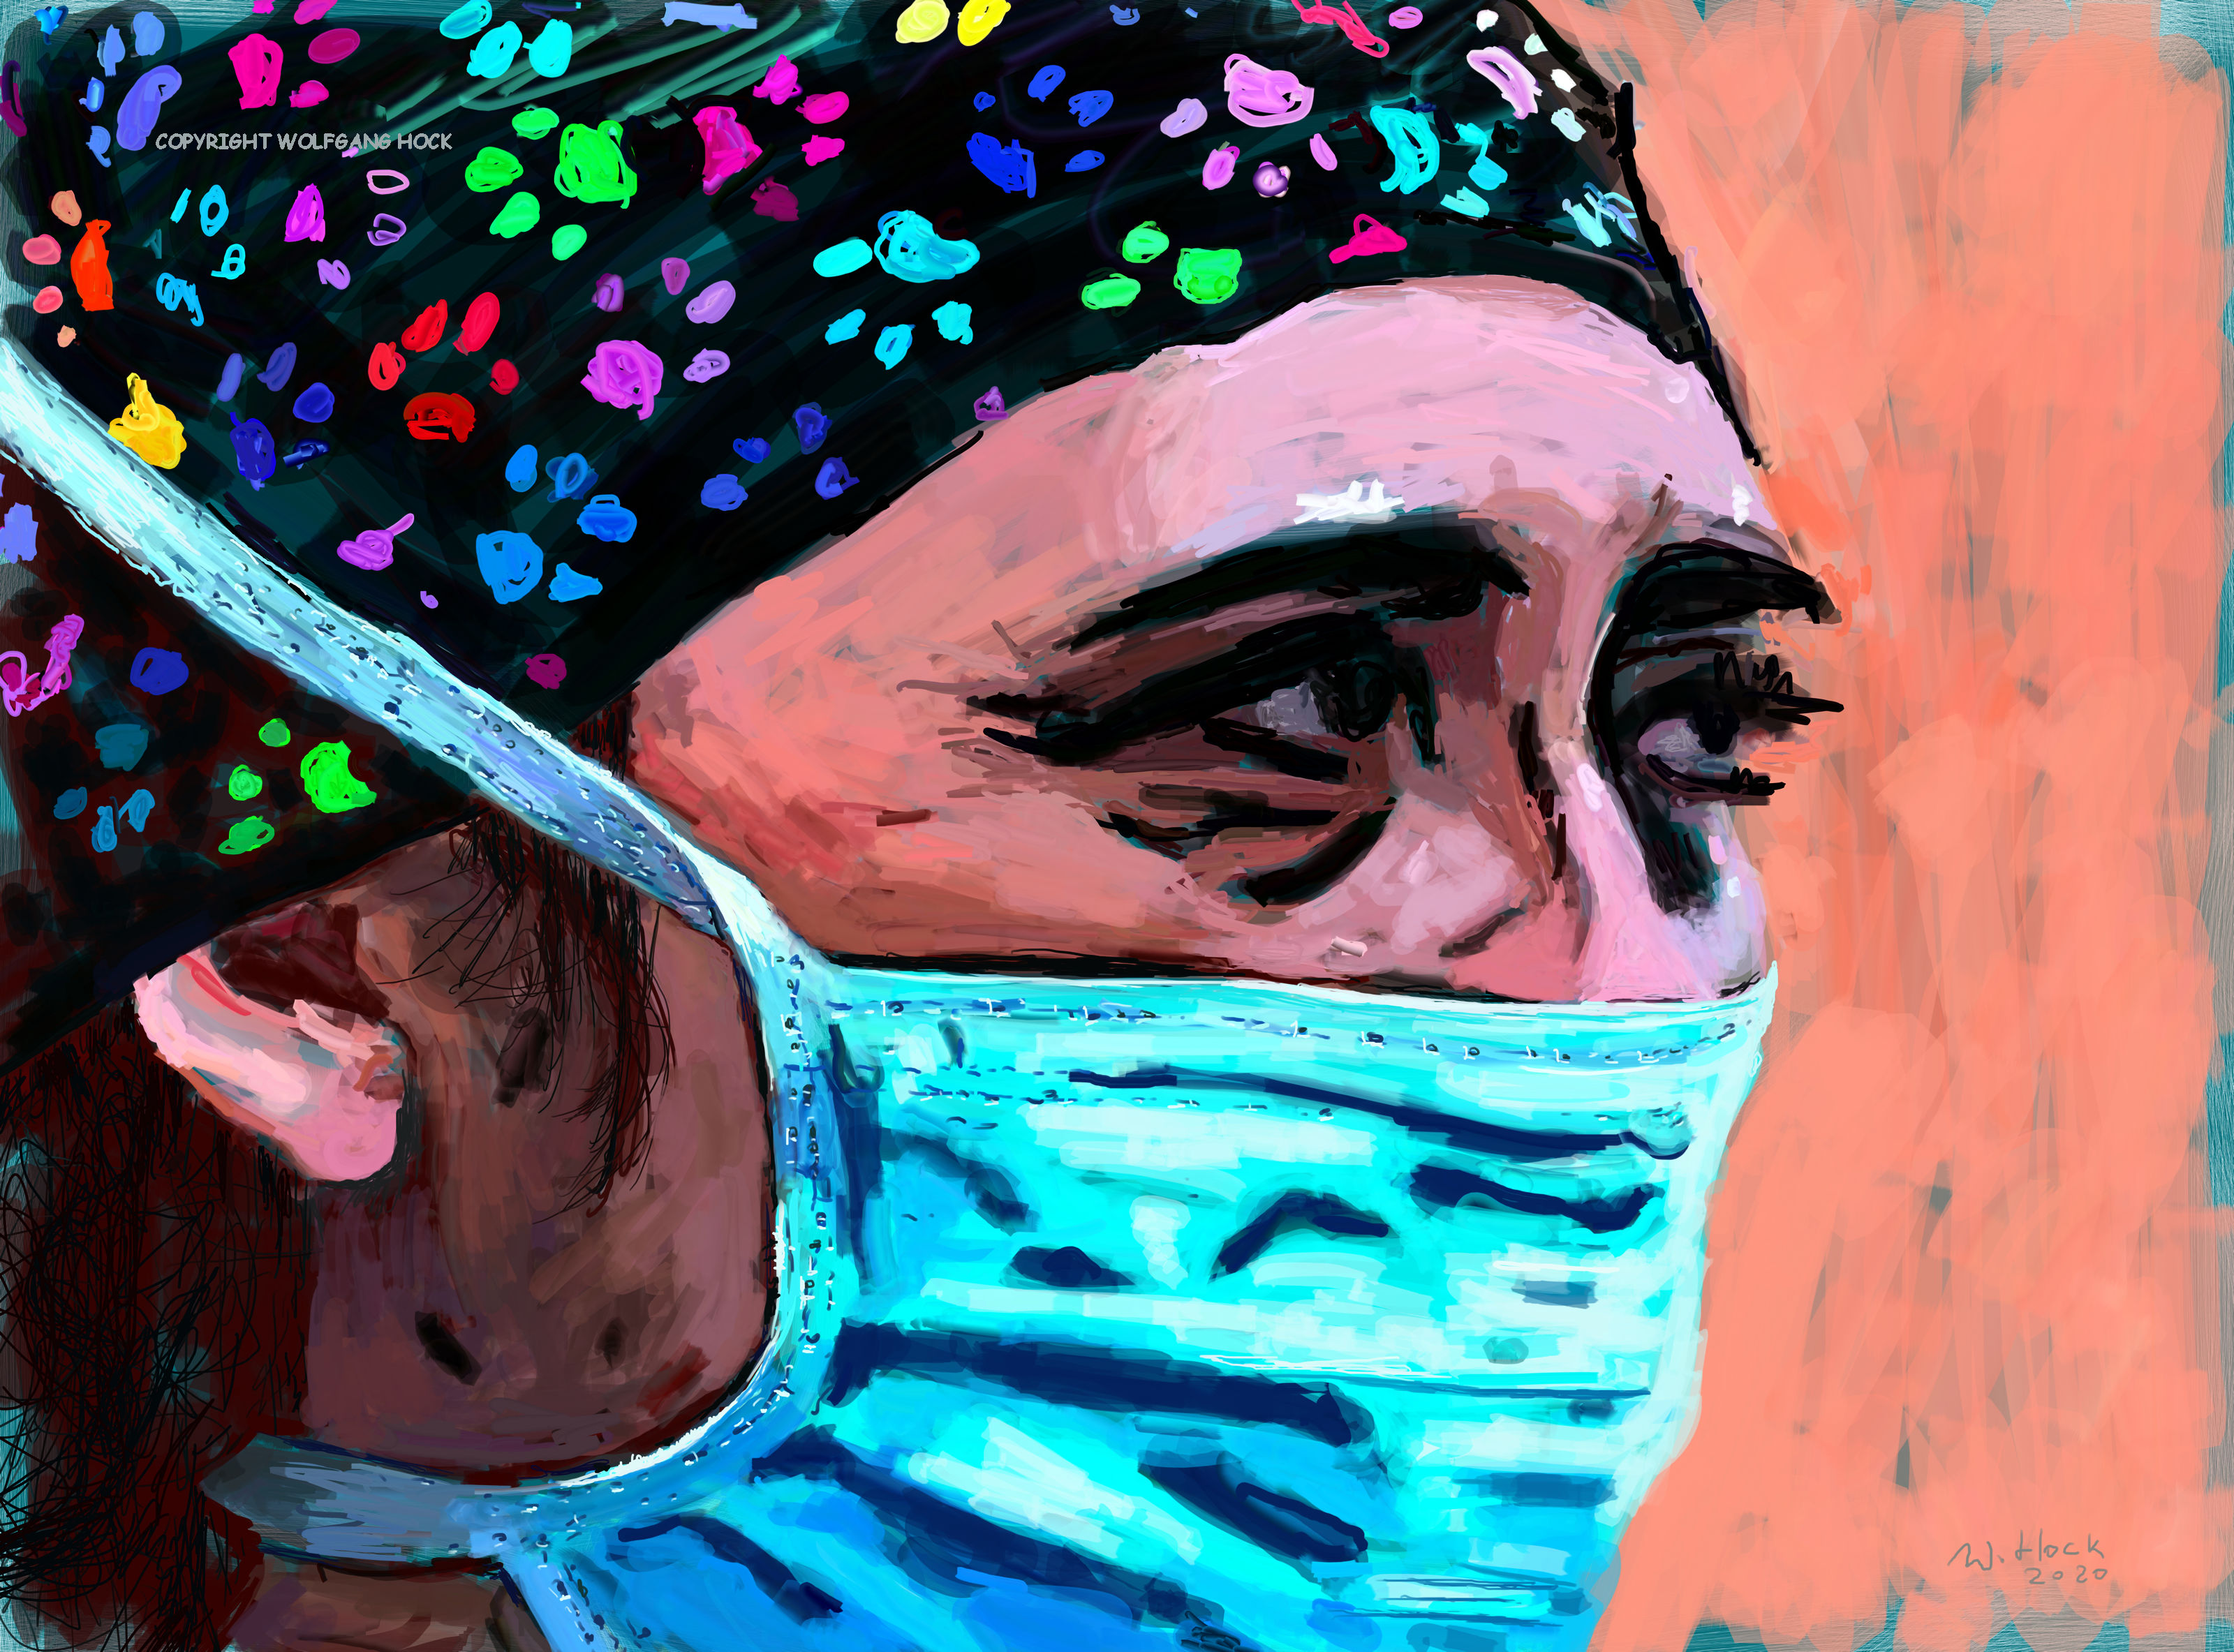 Krankenschwester - Nurse - Enfermeira 2020   Handmade digital painting on canvas 135 x 100 cm (199 megapixels)